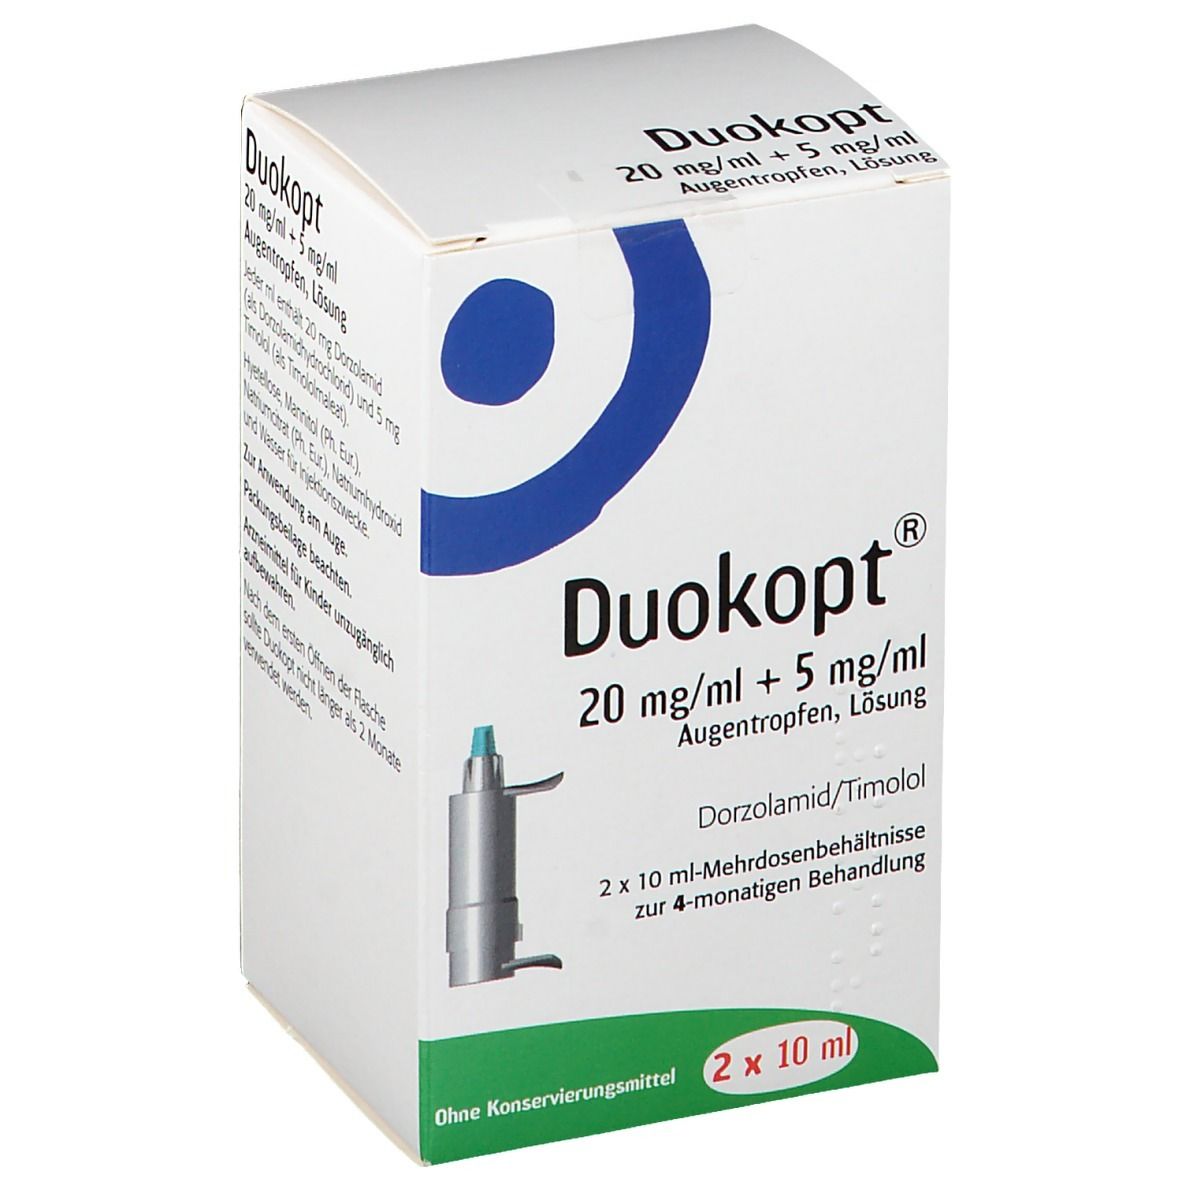 Duokopt® 20 mg/ml + 5 mg/ml